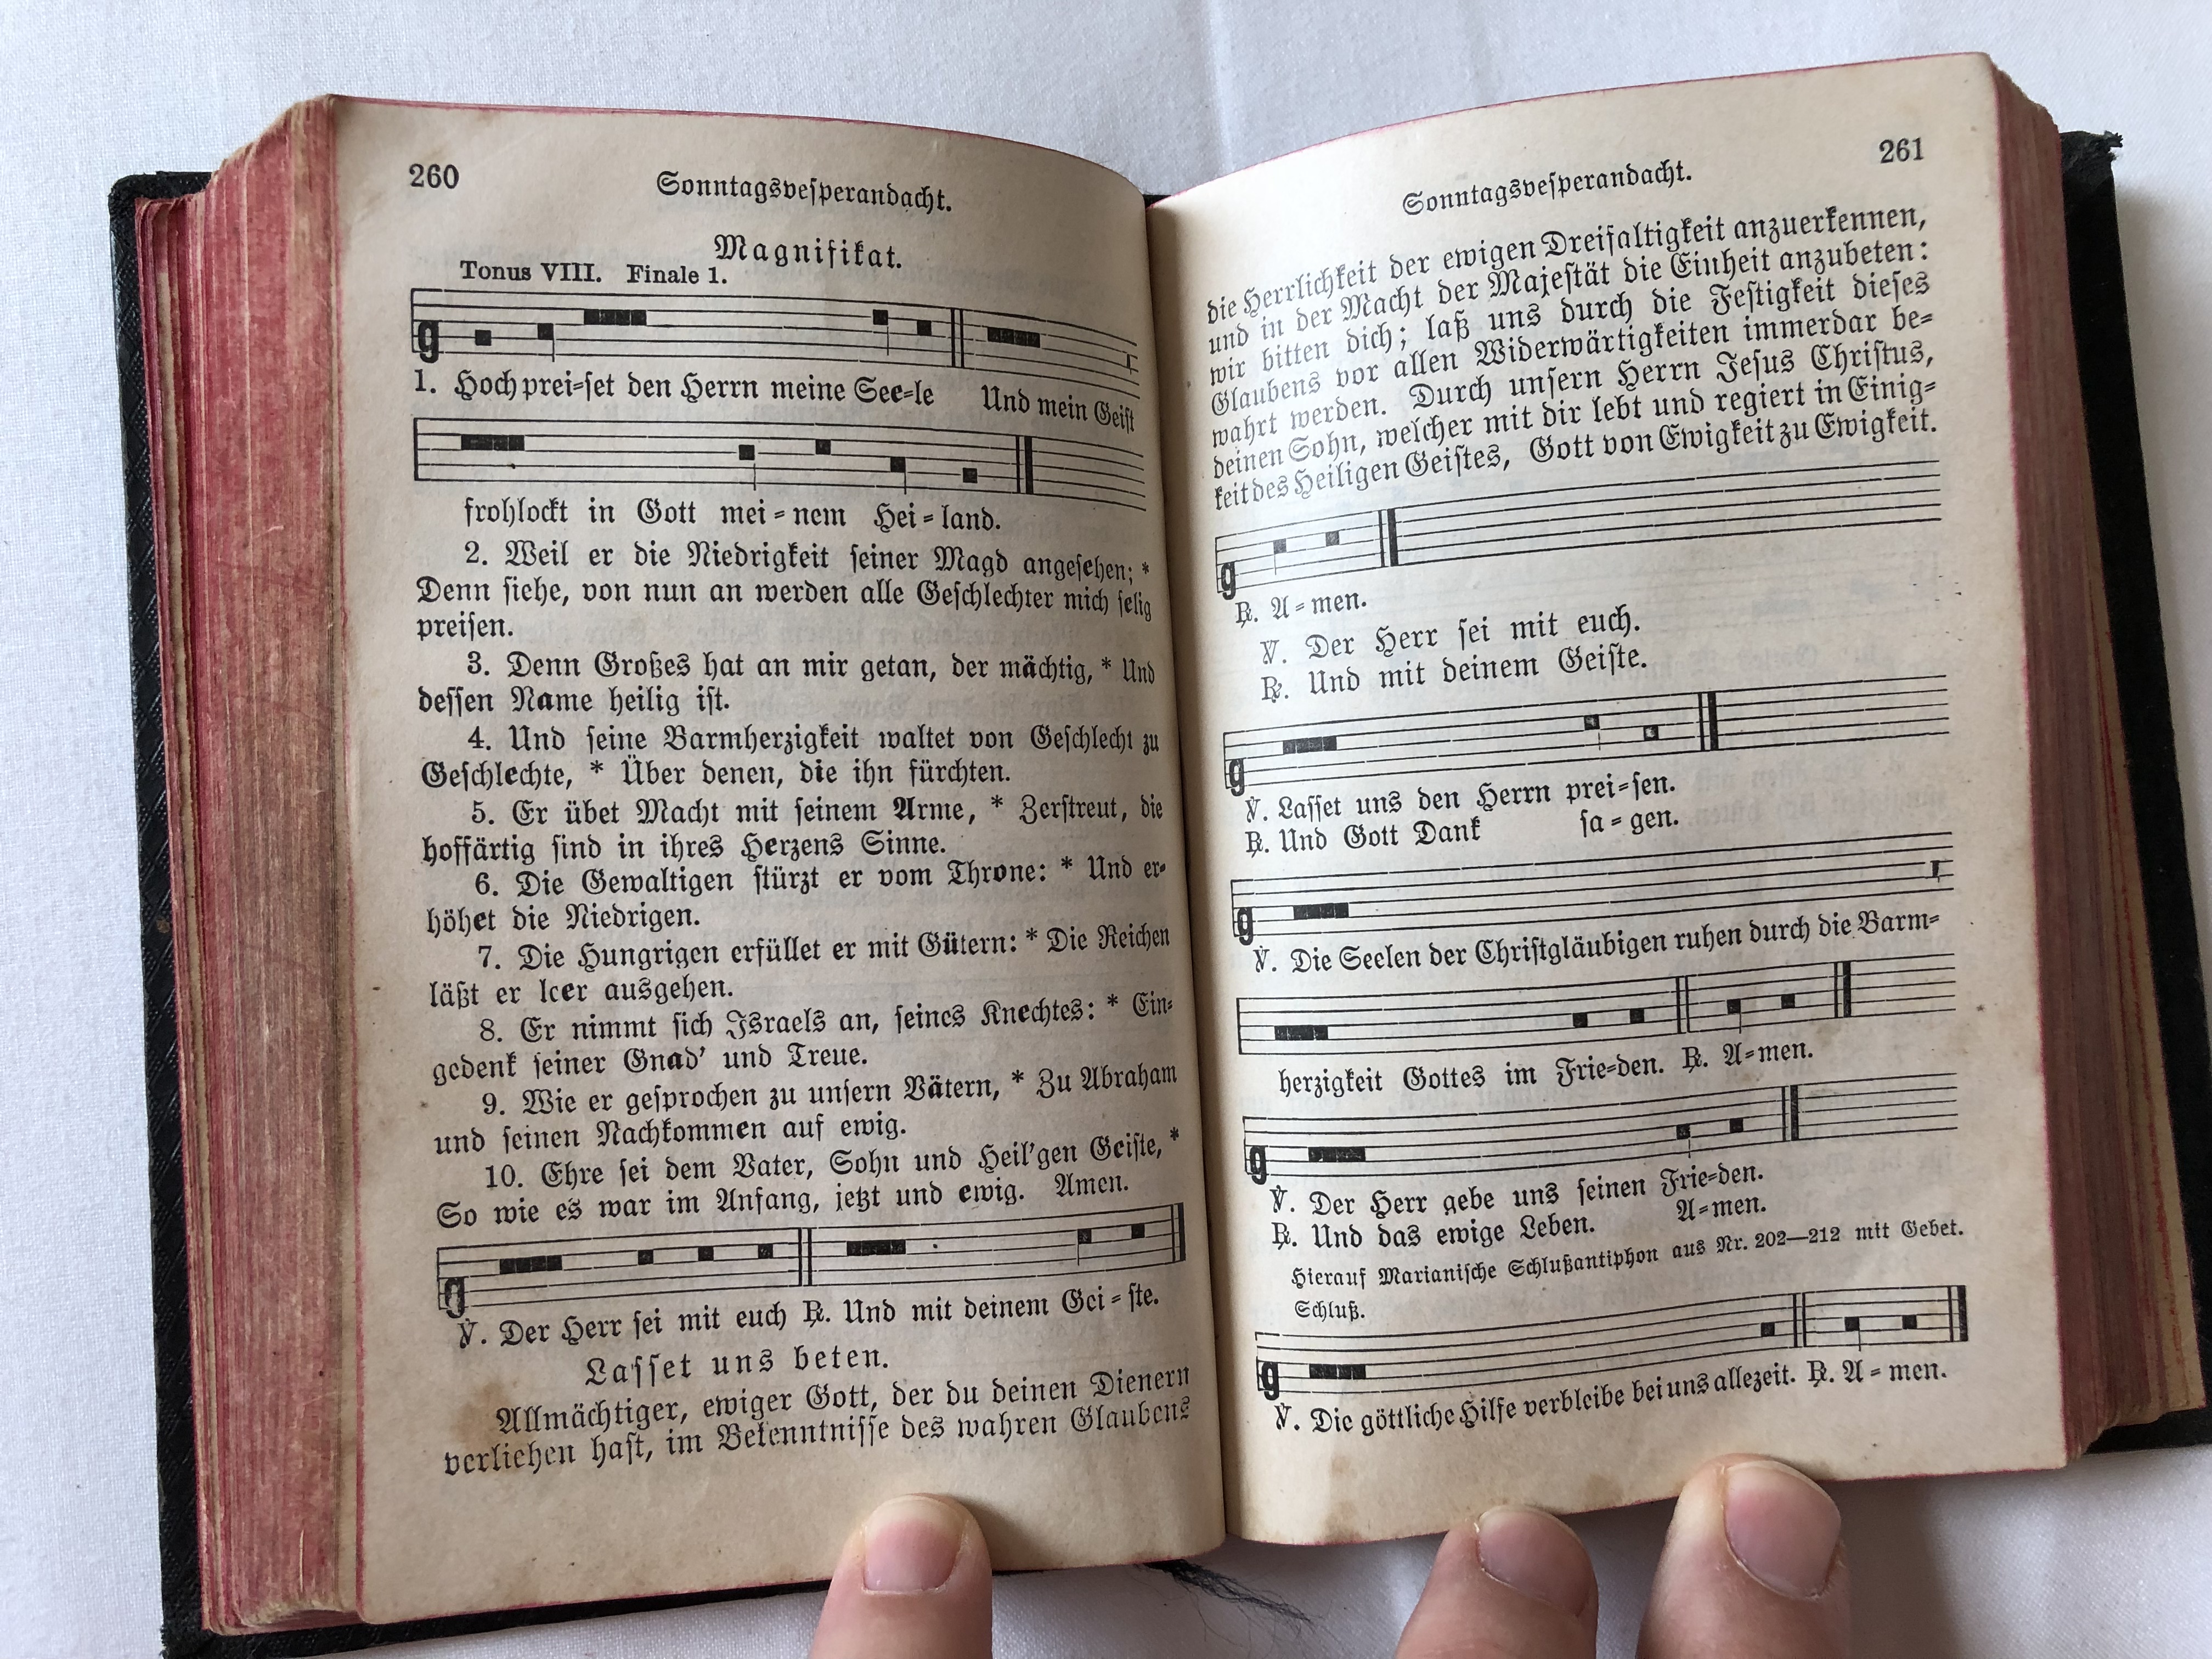 katoliches-gesang-und-andachtsbuch-german-language-catholic-song-and-prayerbook-for-use-in-common-worship-bisch-flichen-kanzlei-rottenburg-antique-german-book-hardcover-1907-7-.jpg